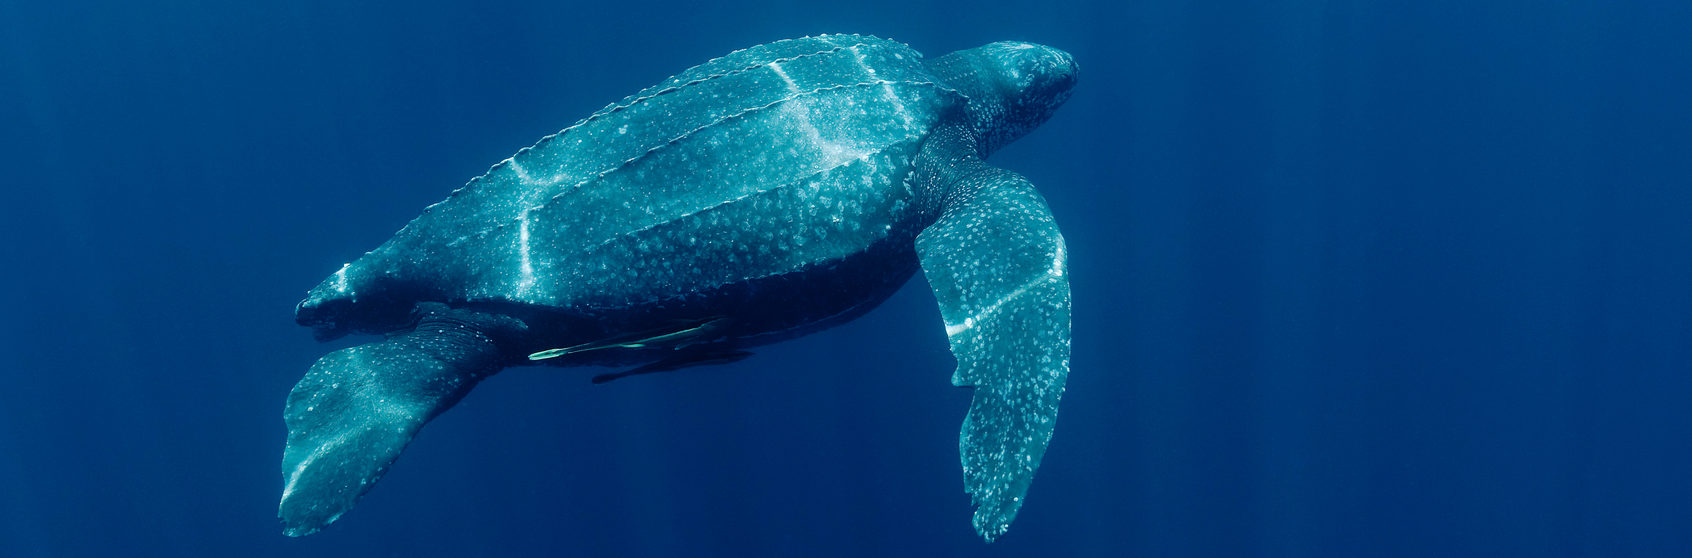 Leatherback turtle (Dermochelys coriacea) underwater, Indonesia